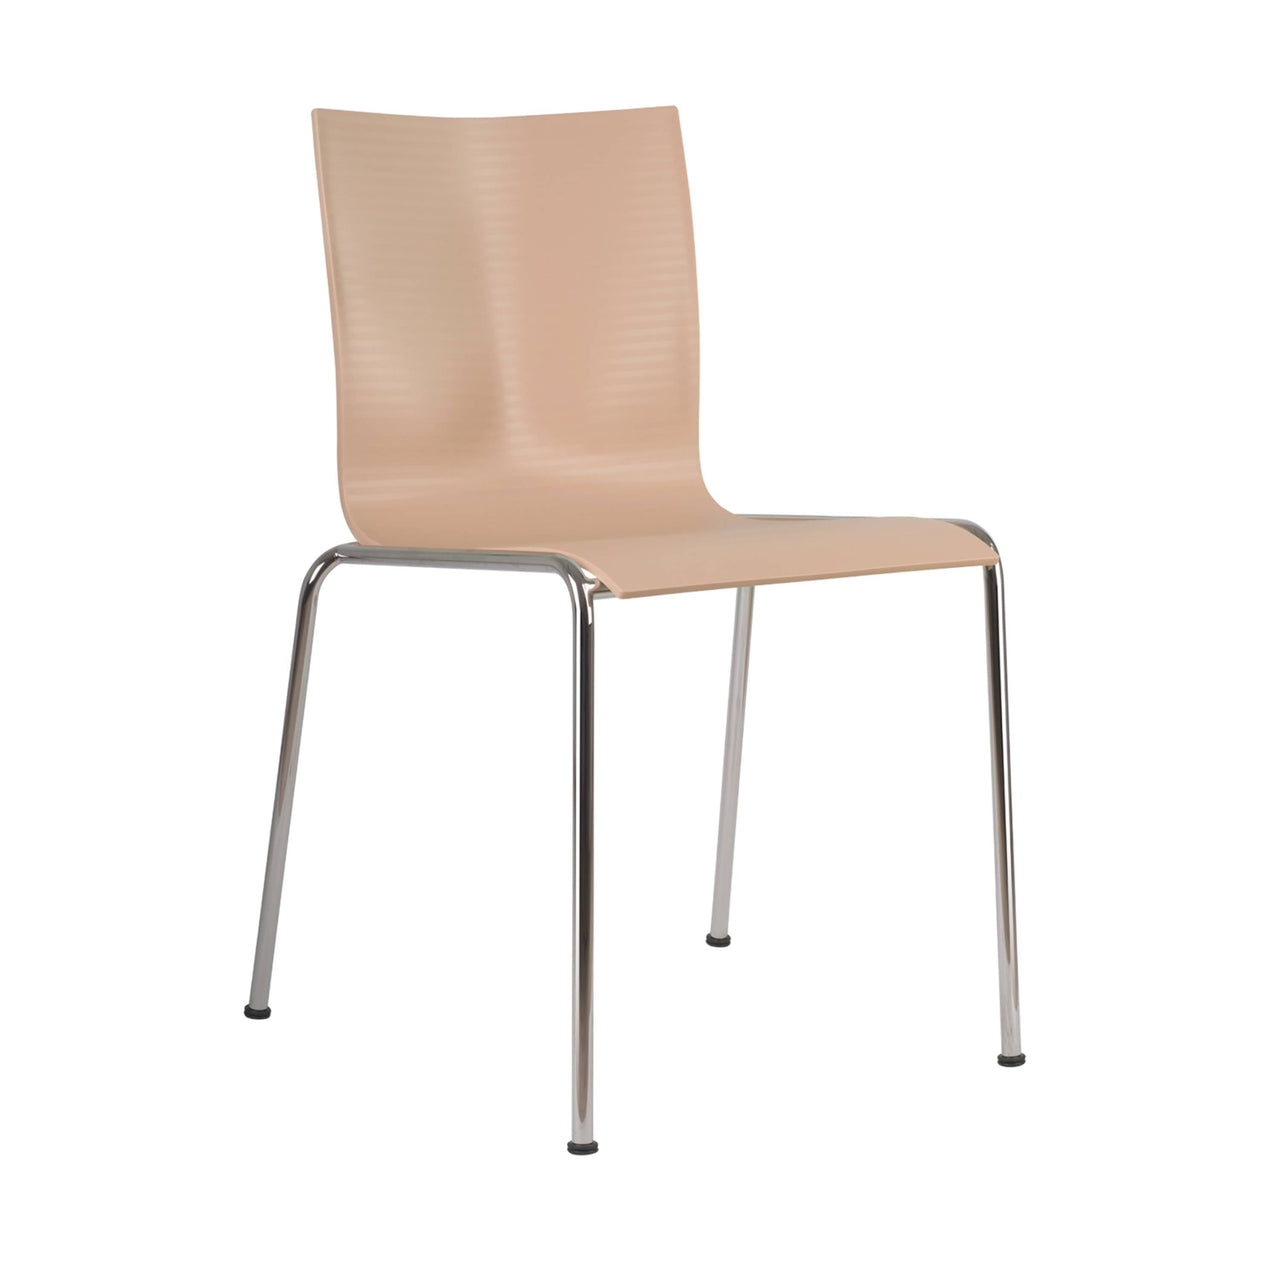 Chairik 101 Chair: Plastic + Rose